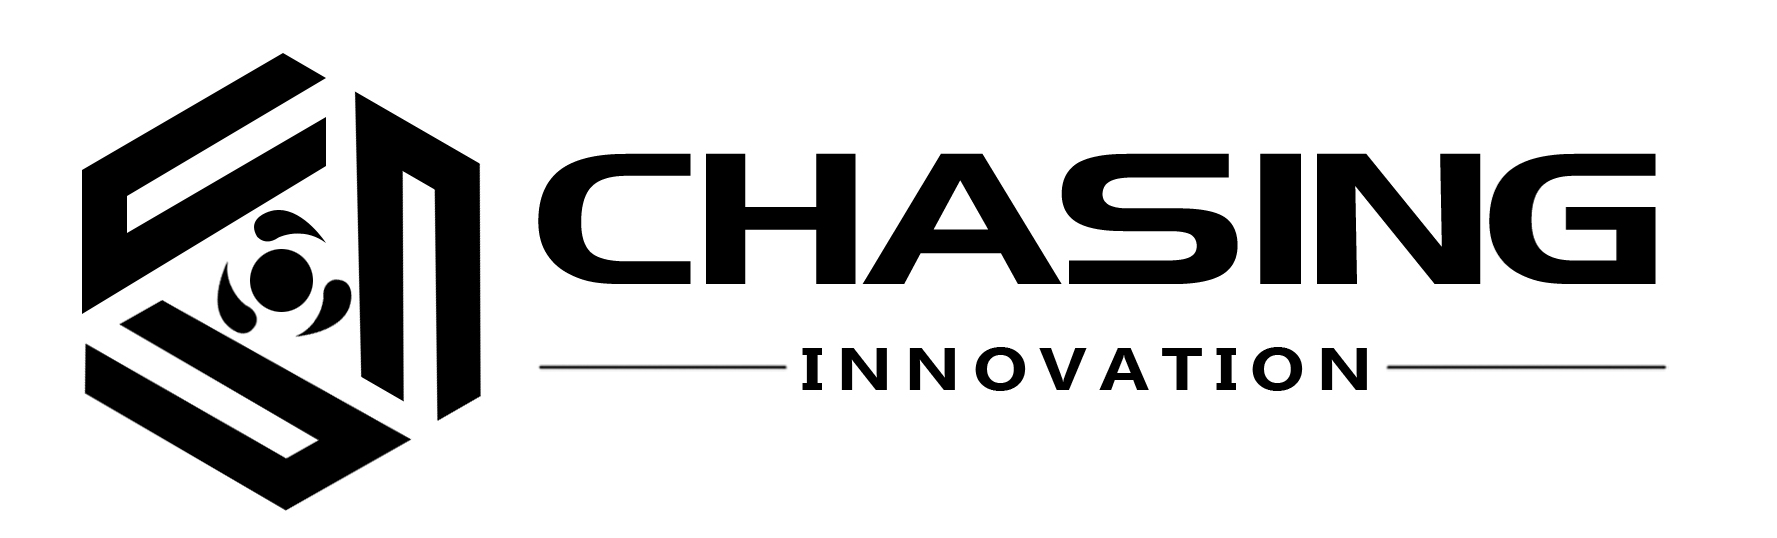 Chasing-innovation-logo-black